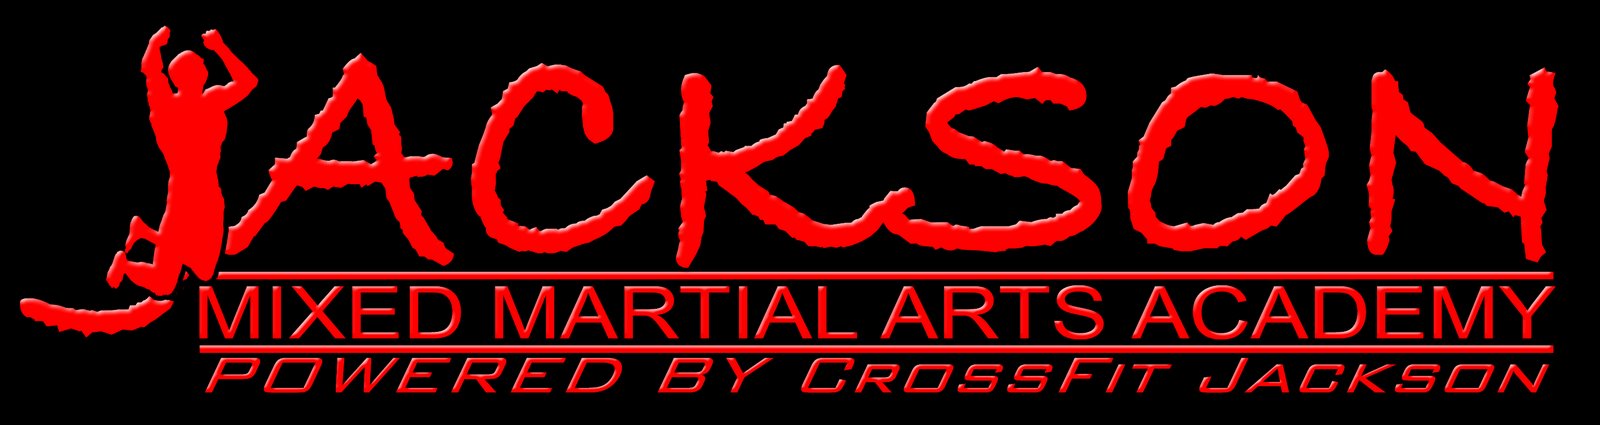 Jackson Mixed Martial Arts Academy